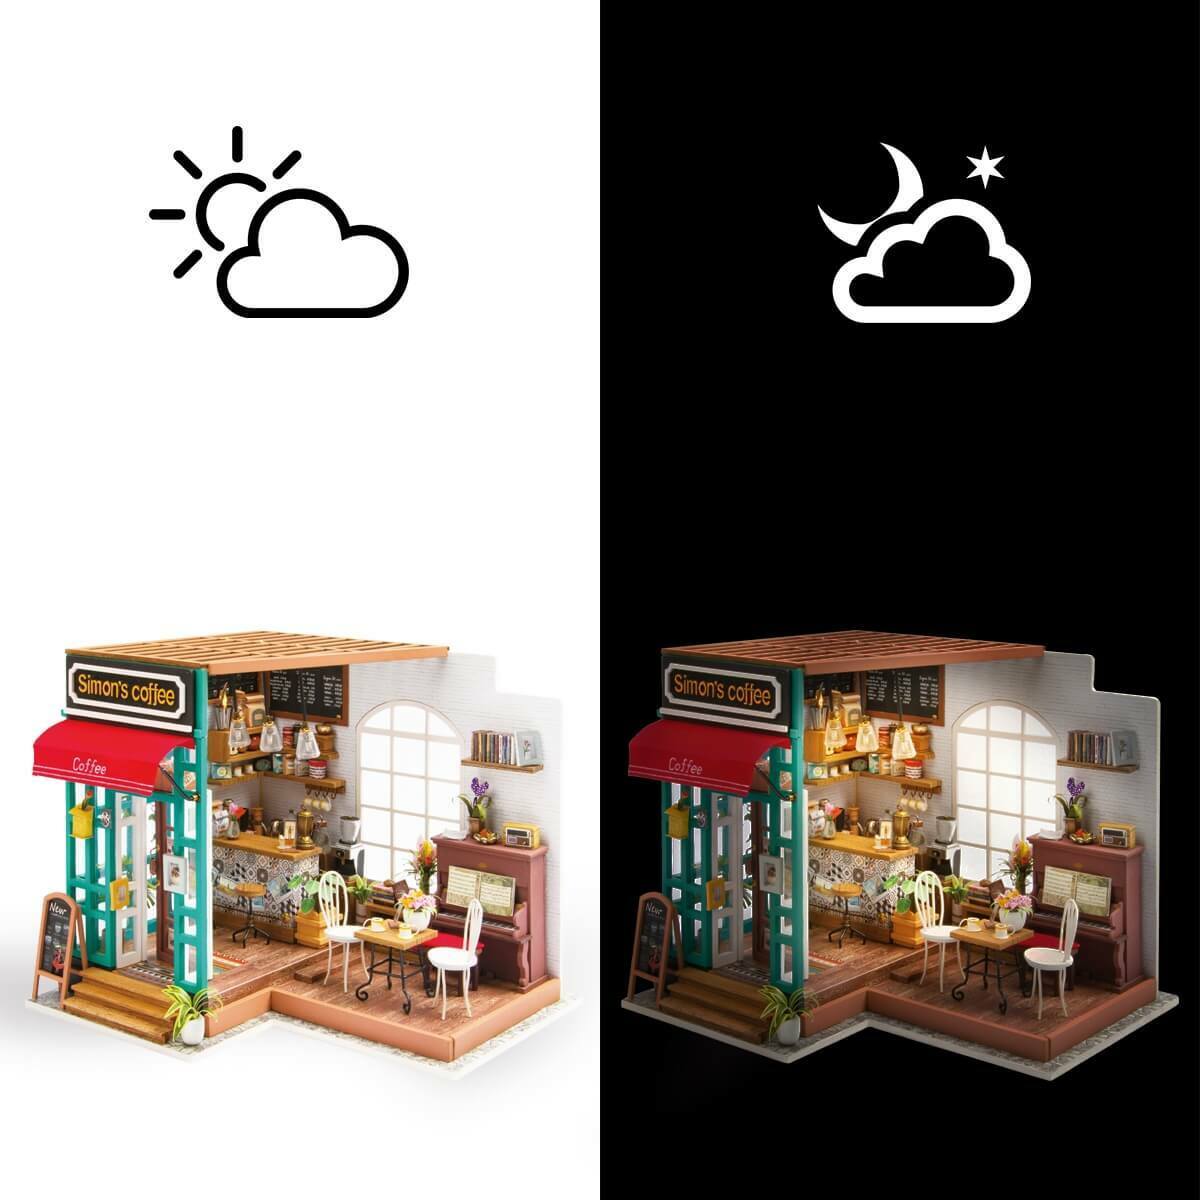 DIY Dollhouse Miniature - Simon's Coffee